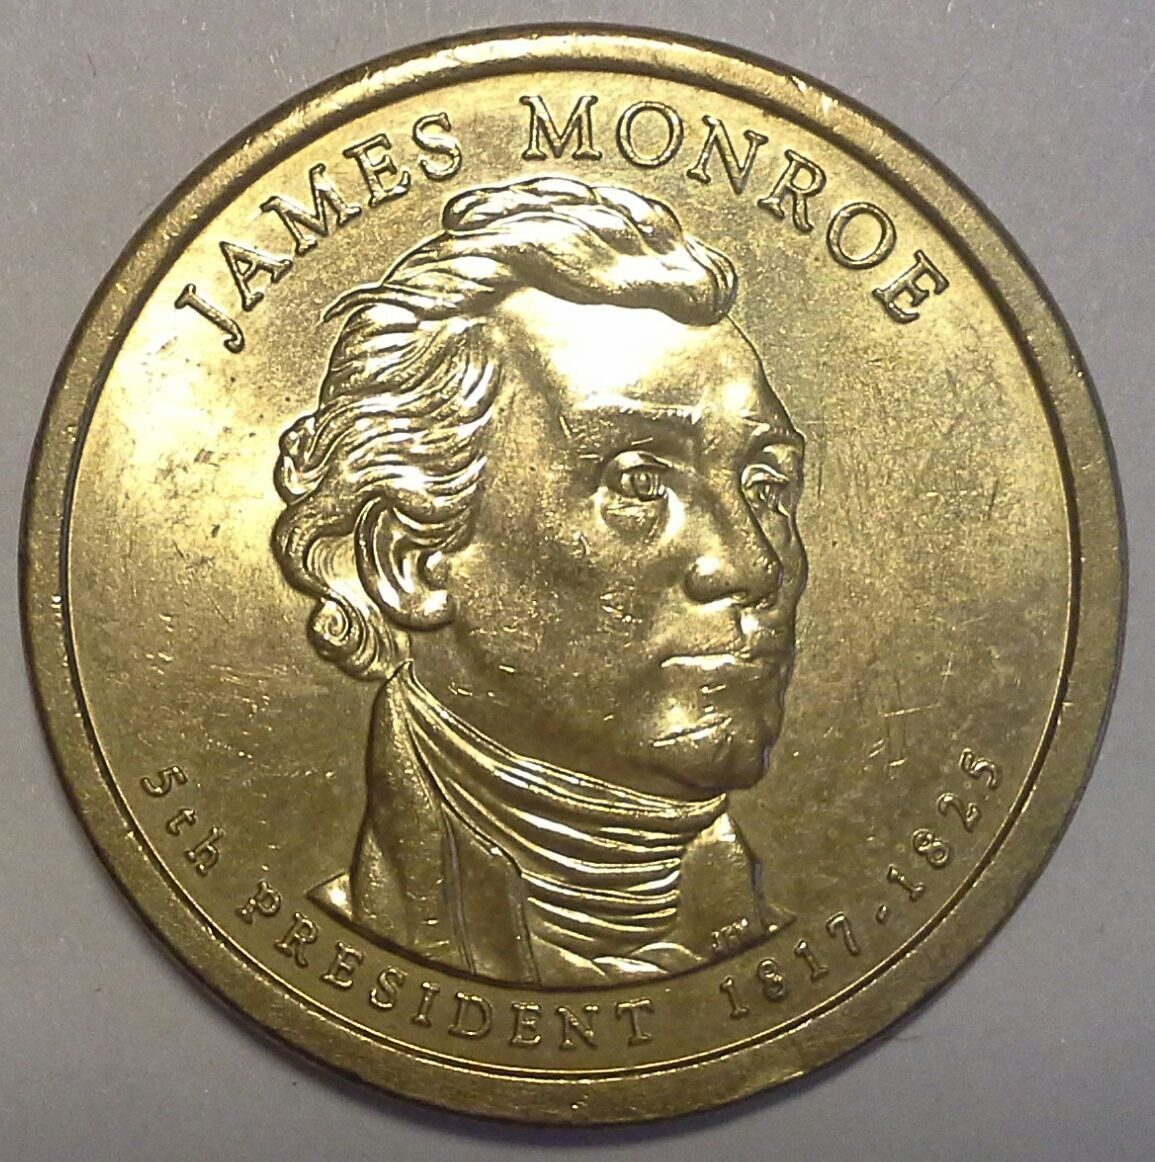 1 доллар 2008. James Monro. Президентство Монро США.